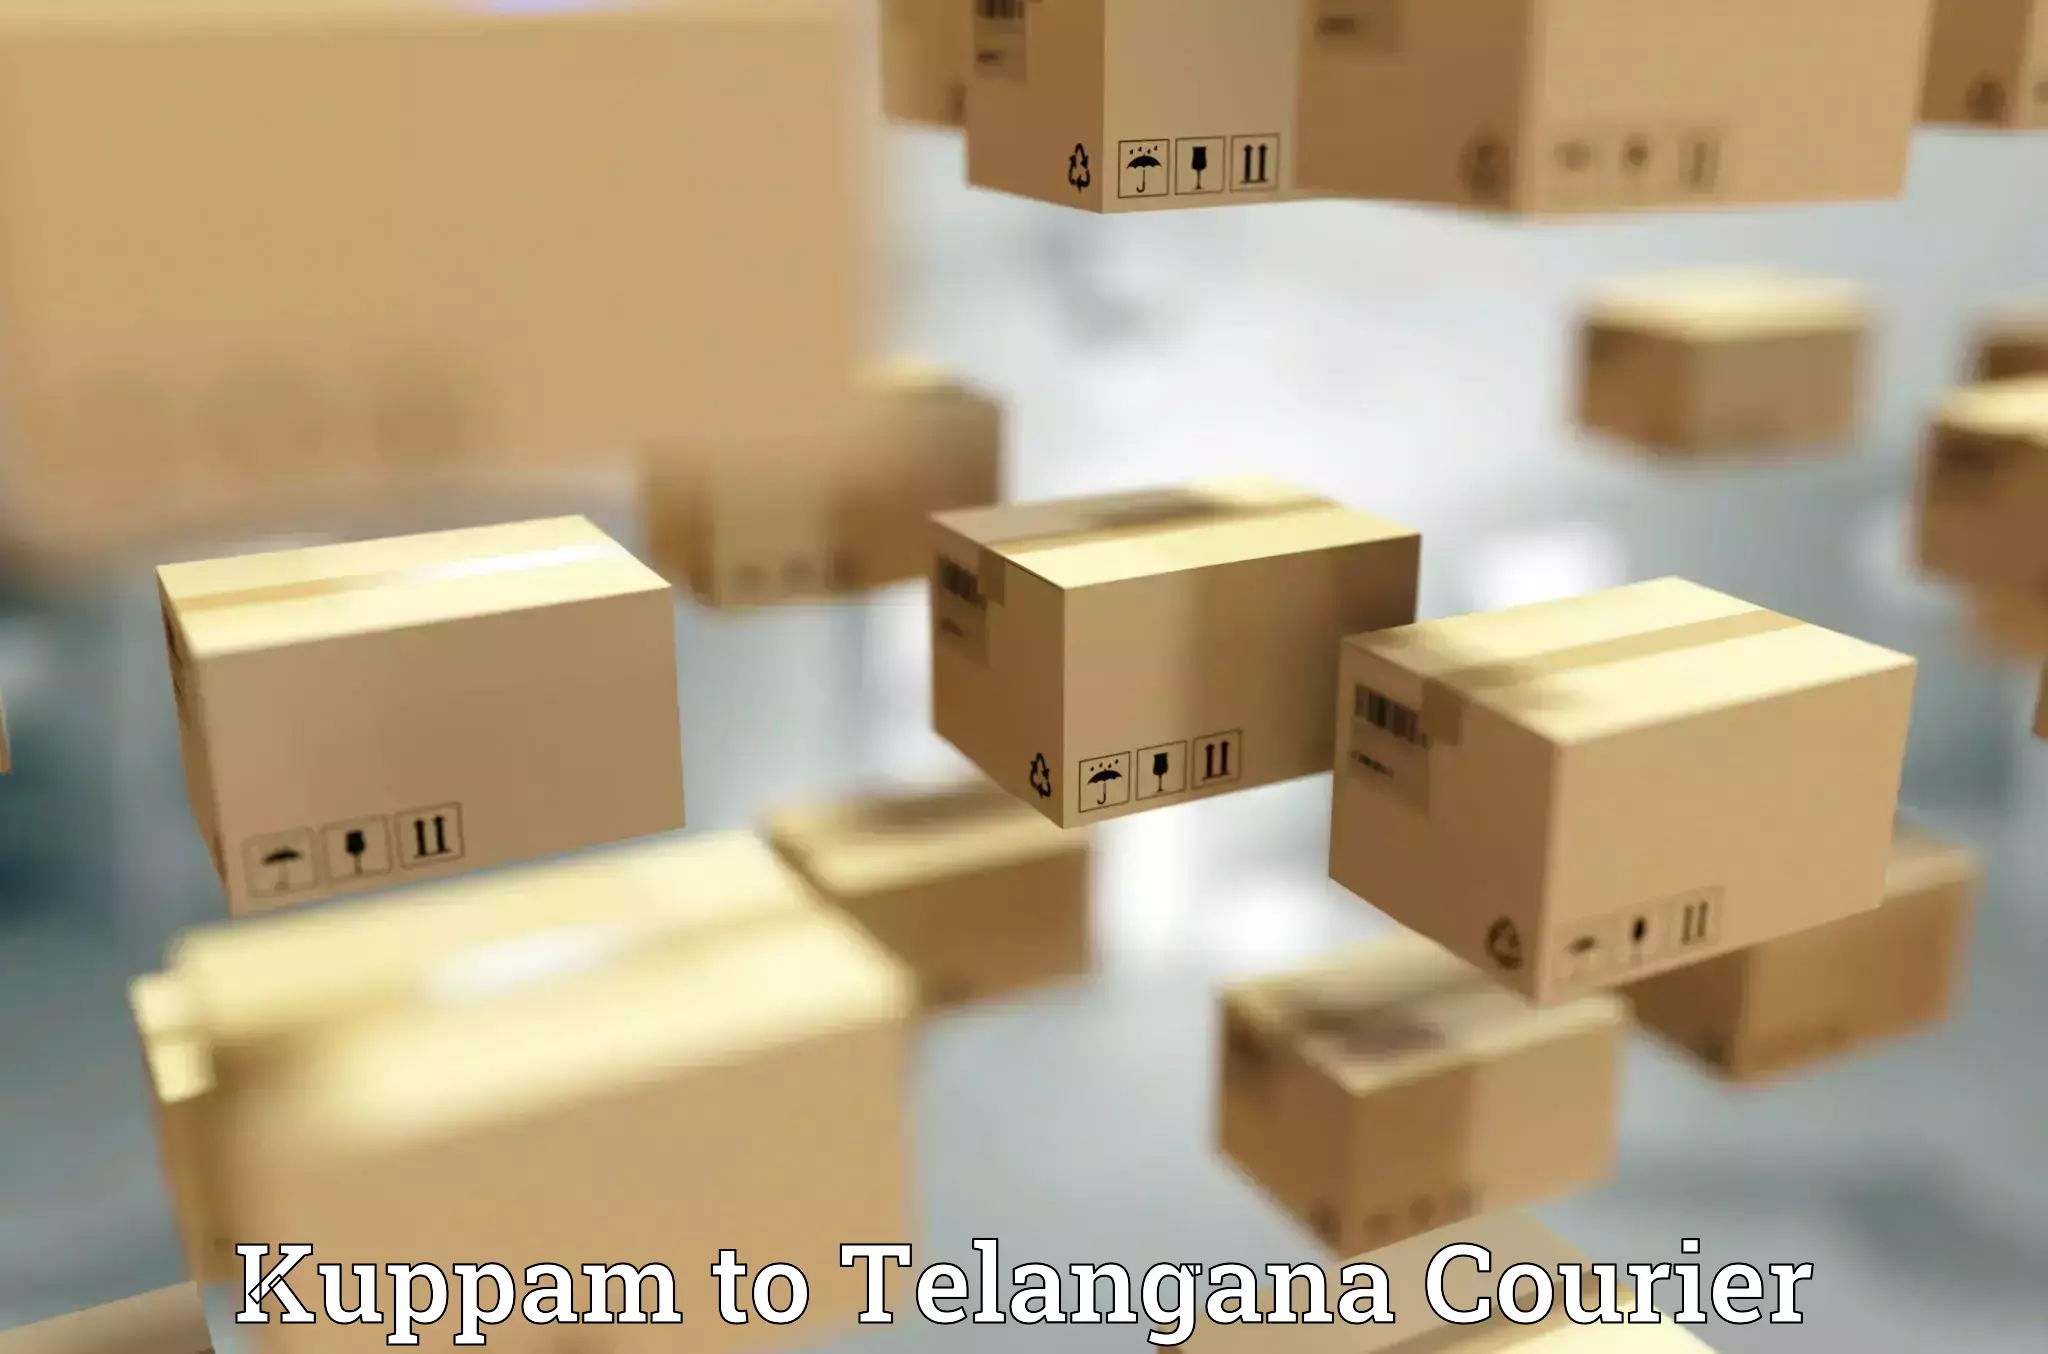 Online package tracking Kuppam to Mudigonda